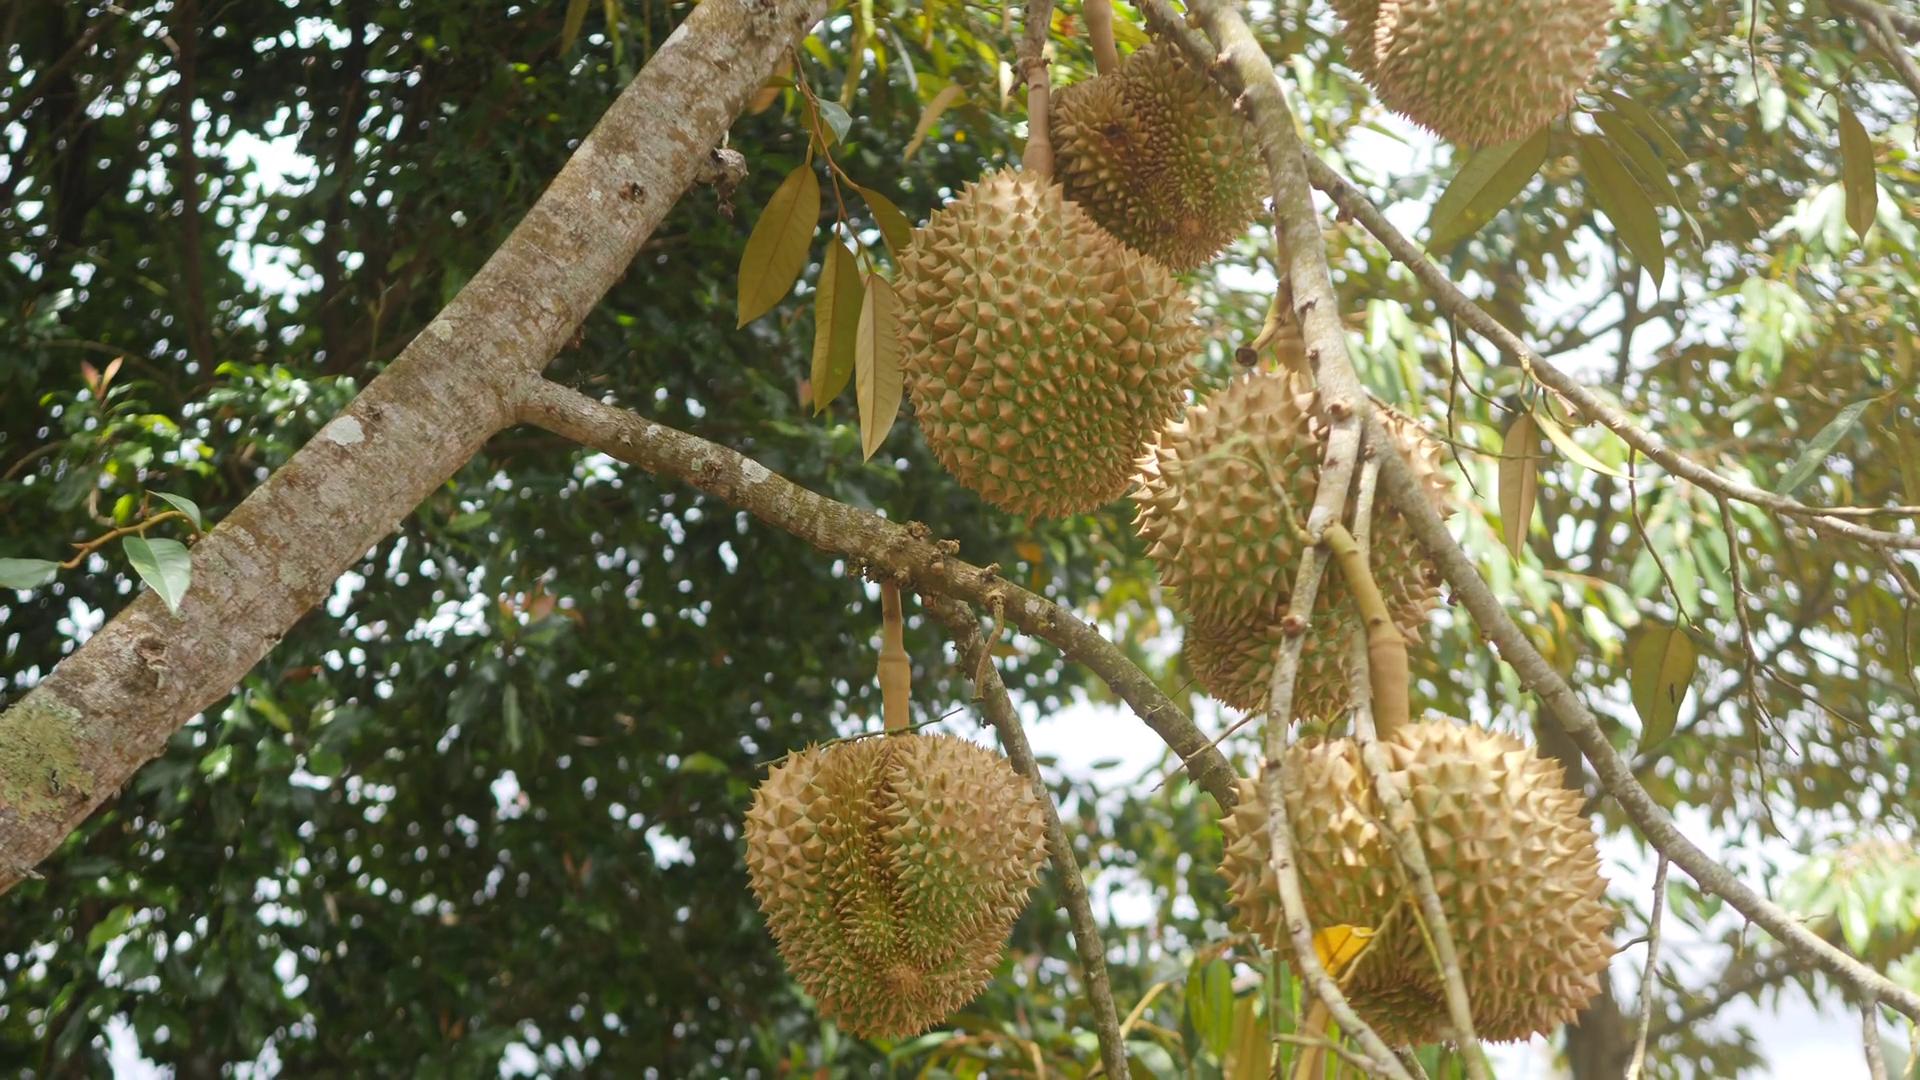 videoblocks-fresh-durian-on-the-tree-in-the-organic-plantation-garden-farm-popular-asian-king-of-fruit-4k-bali-indonesia_rnwakzsksz_thumbnail-full01